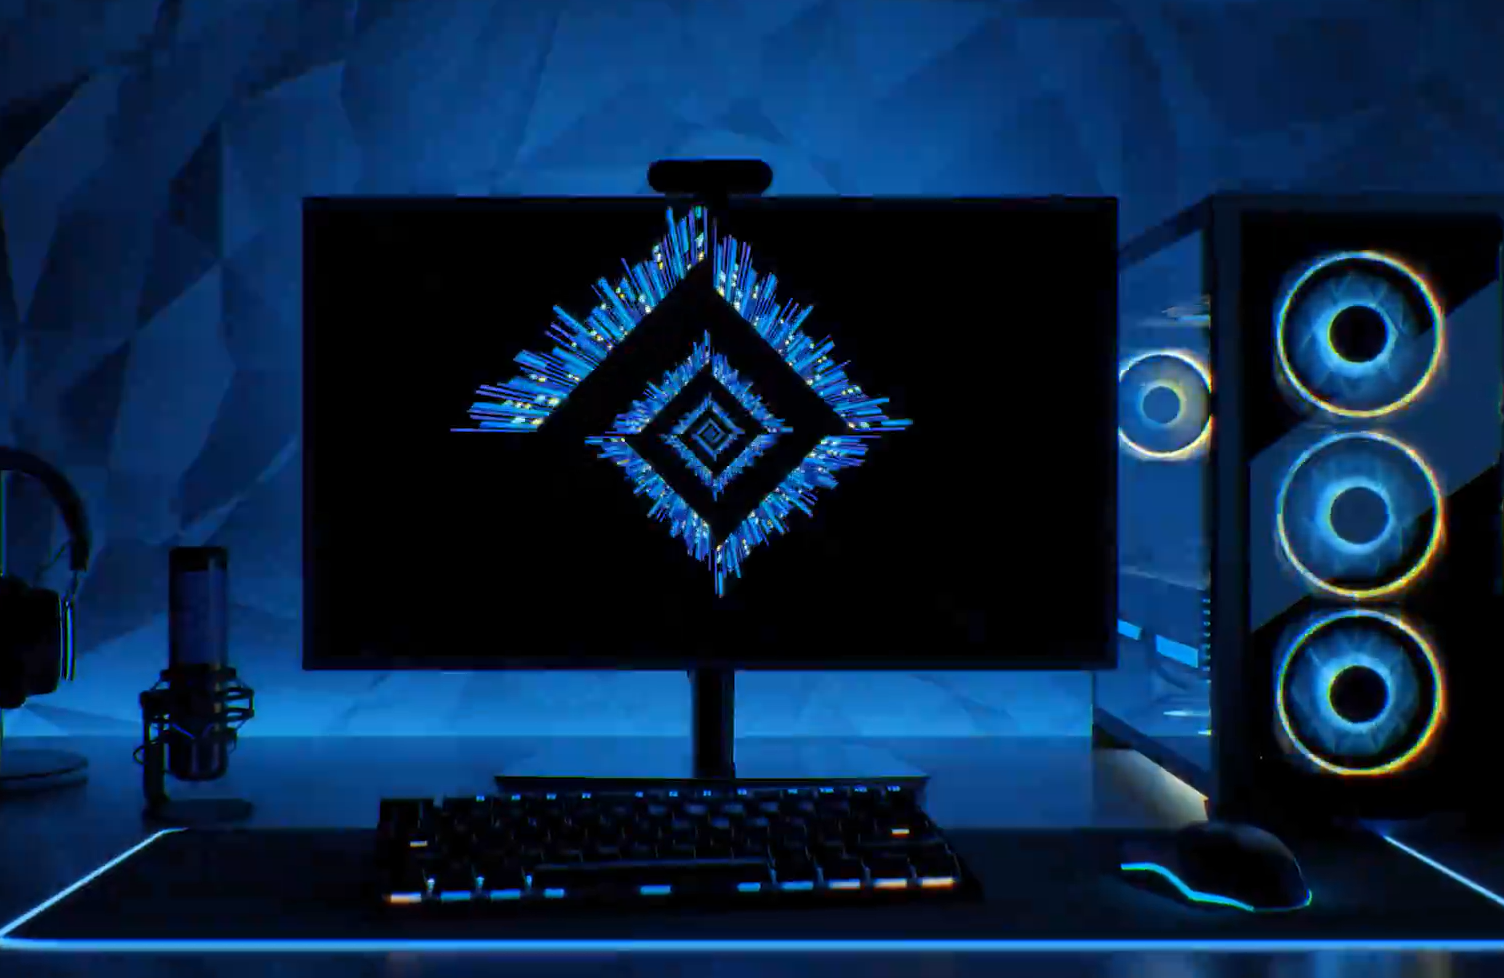 Intel Mv3 SAP Microsoft : A gaming computer with a blue geometric image to insinuate AI